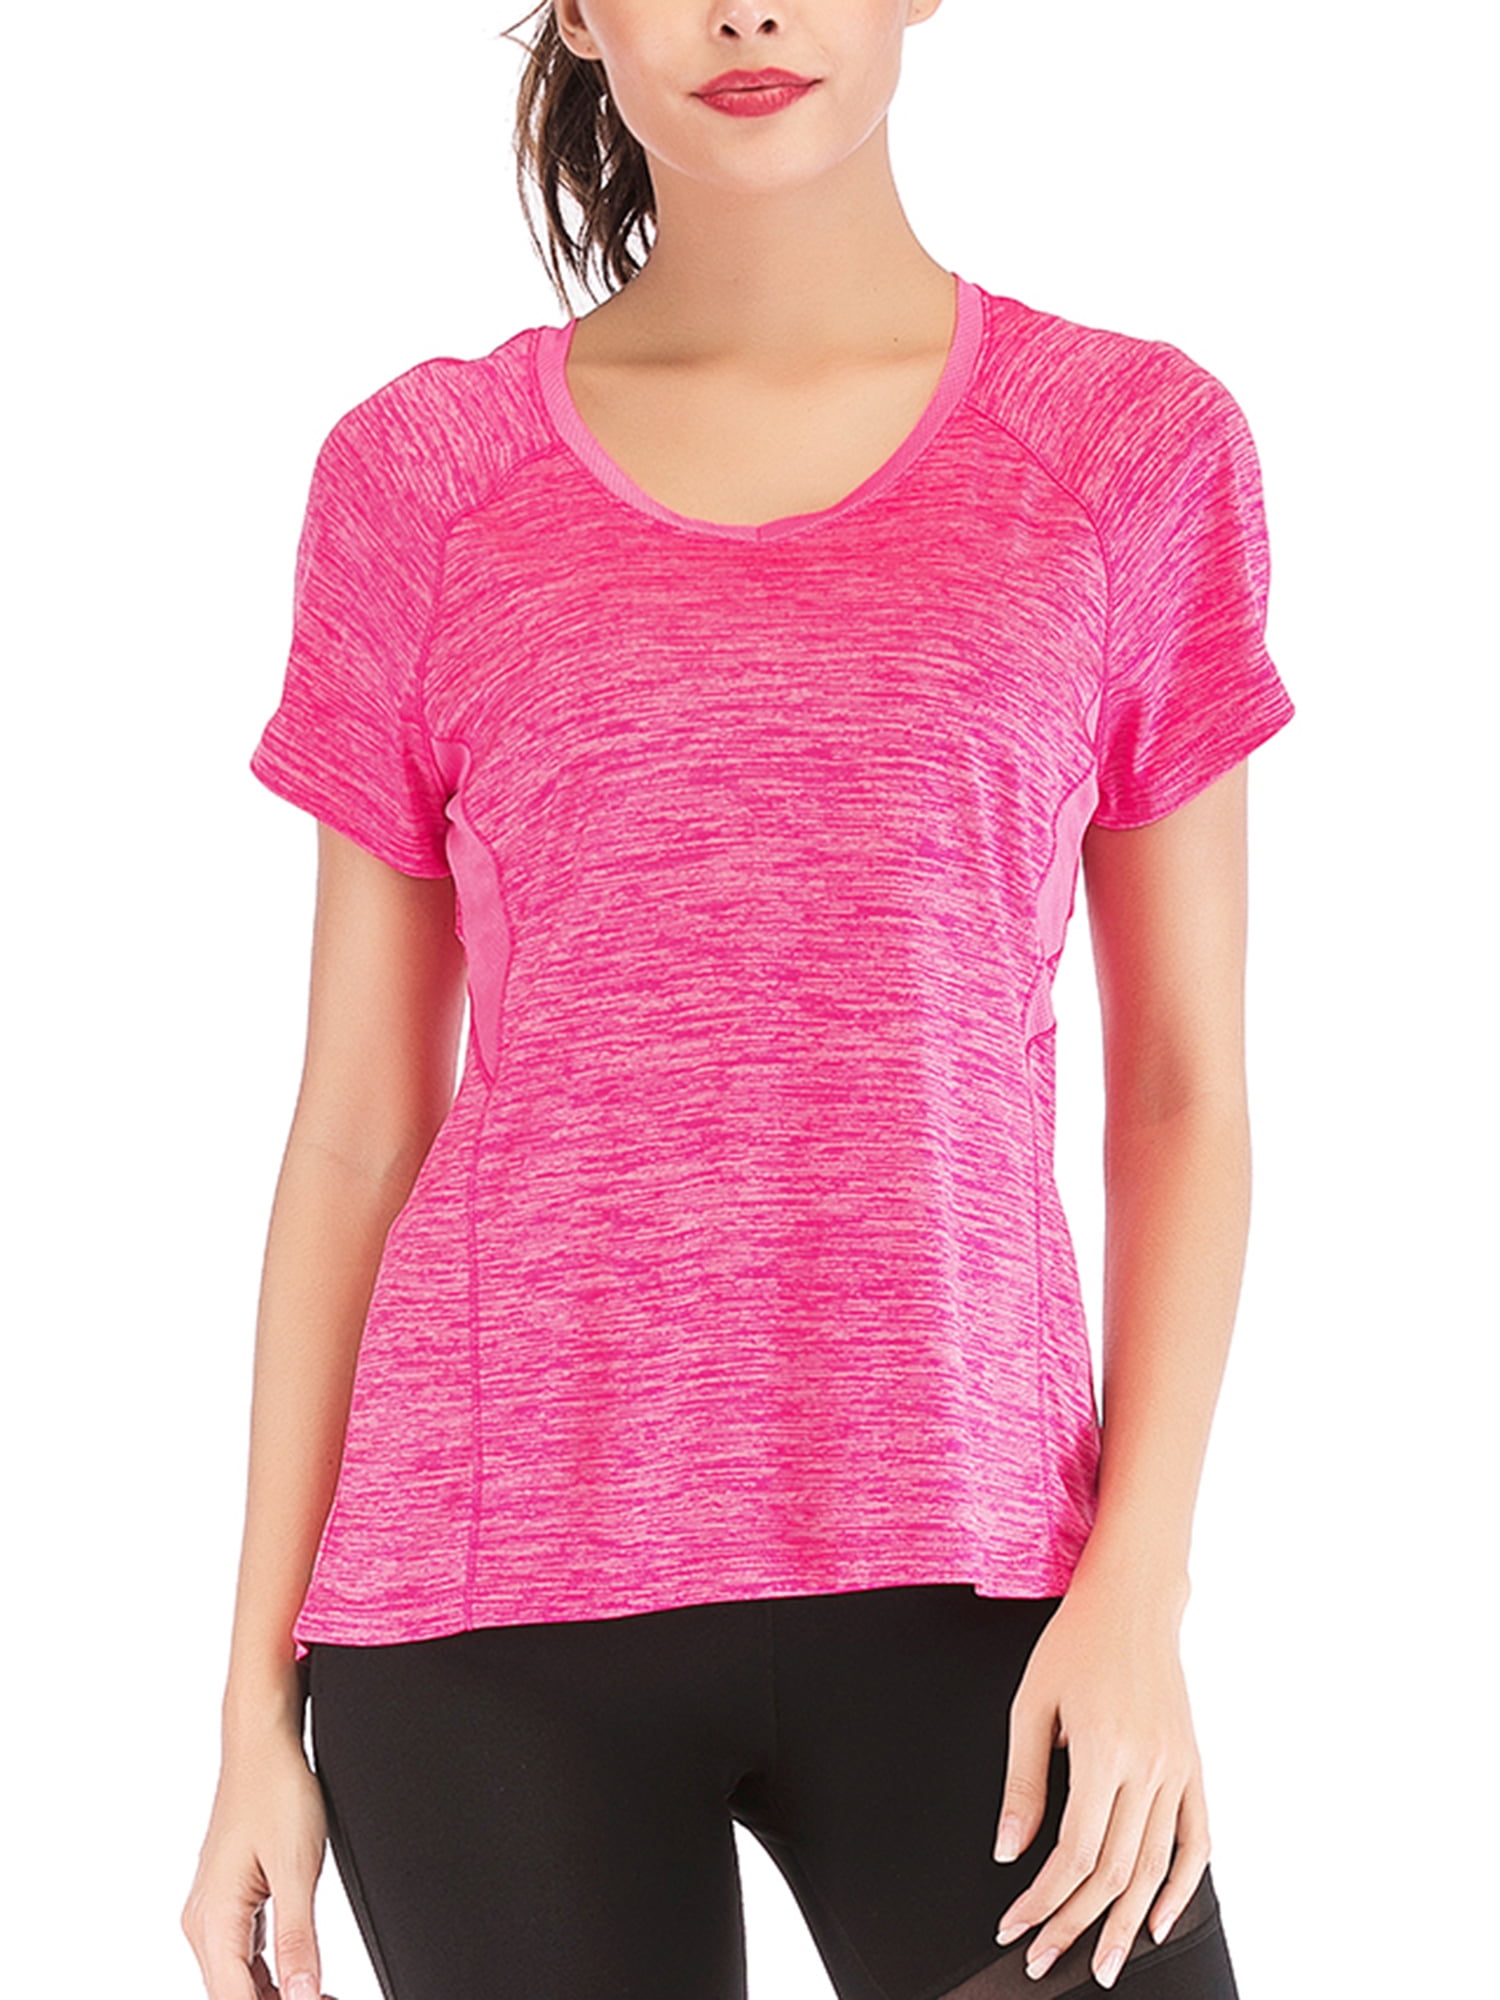 Zengjo Ultra Soft Basic Tee Shirts for Women Scoop Neck Gym Yoga Workout T-Shirt Short Sleeve